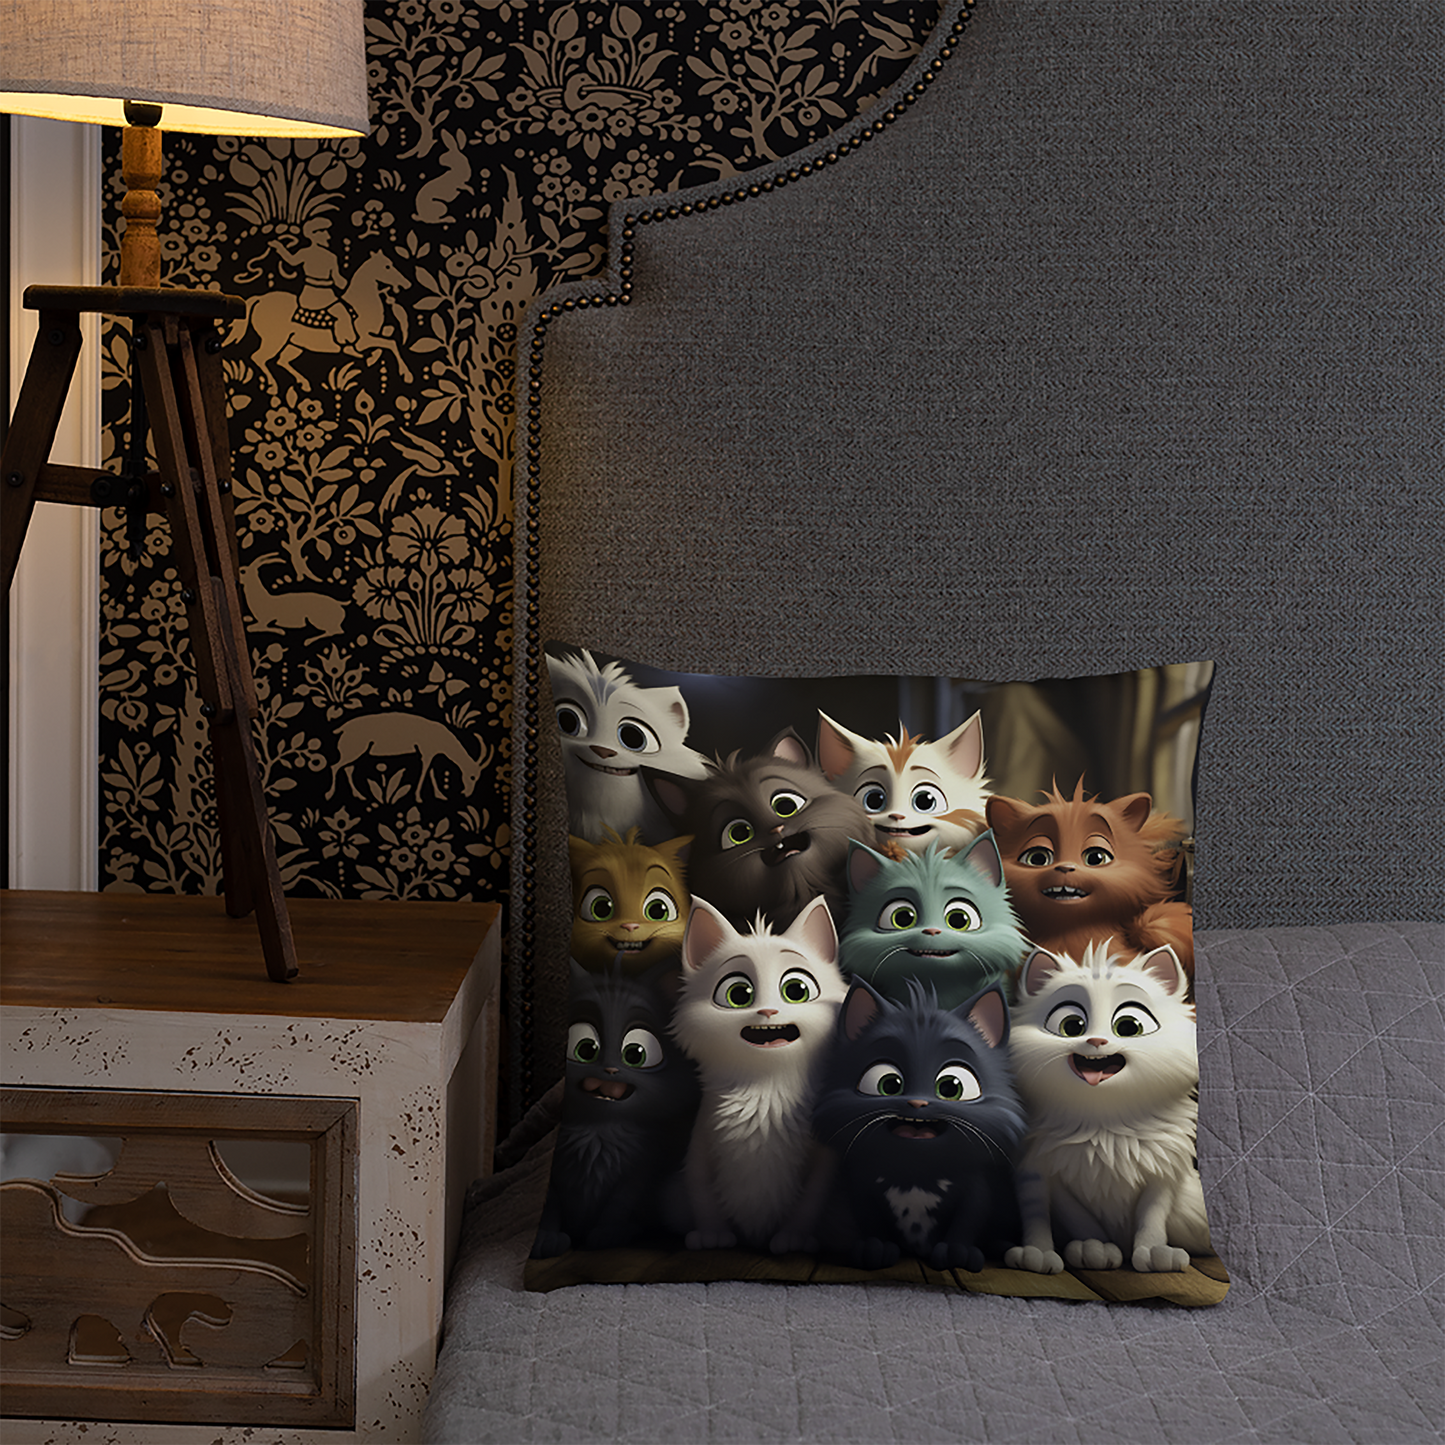 Cat Throw Pillow Animated Feline Gathering Polyester Decorative Cushion 18x18